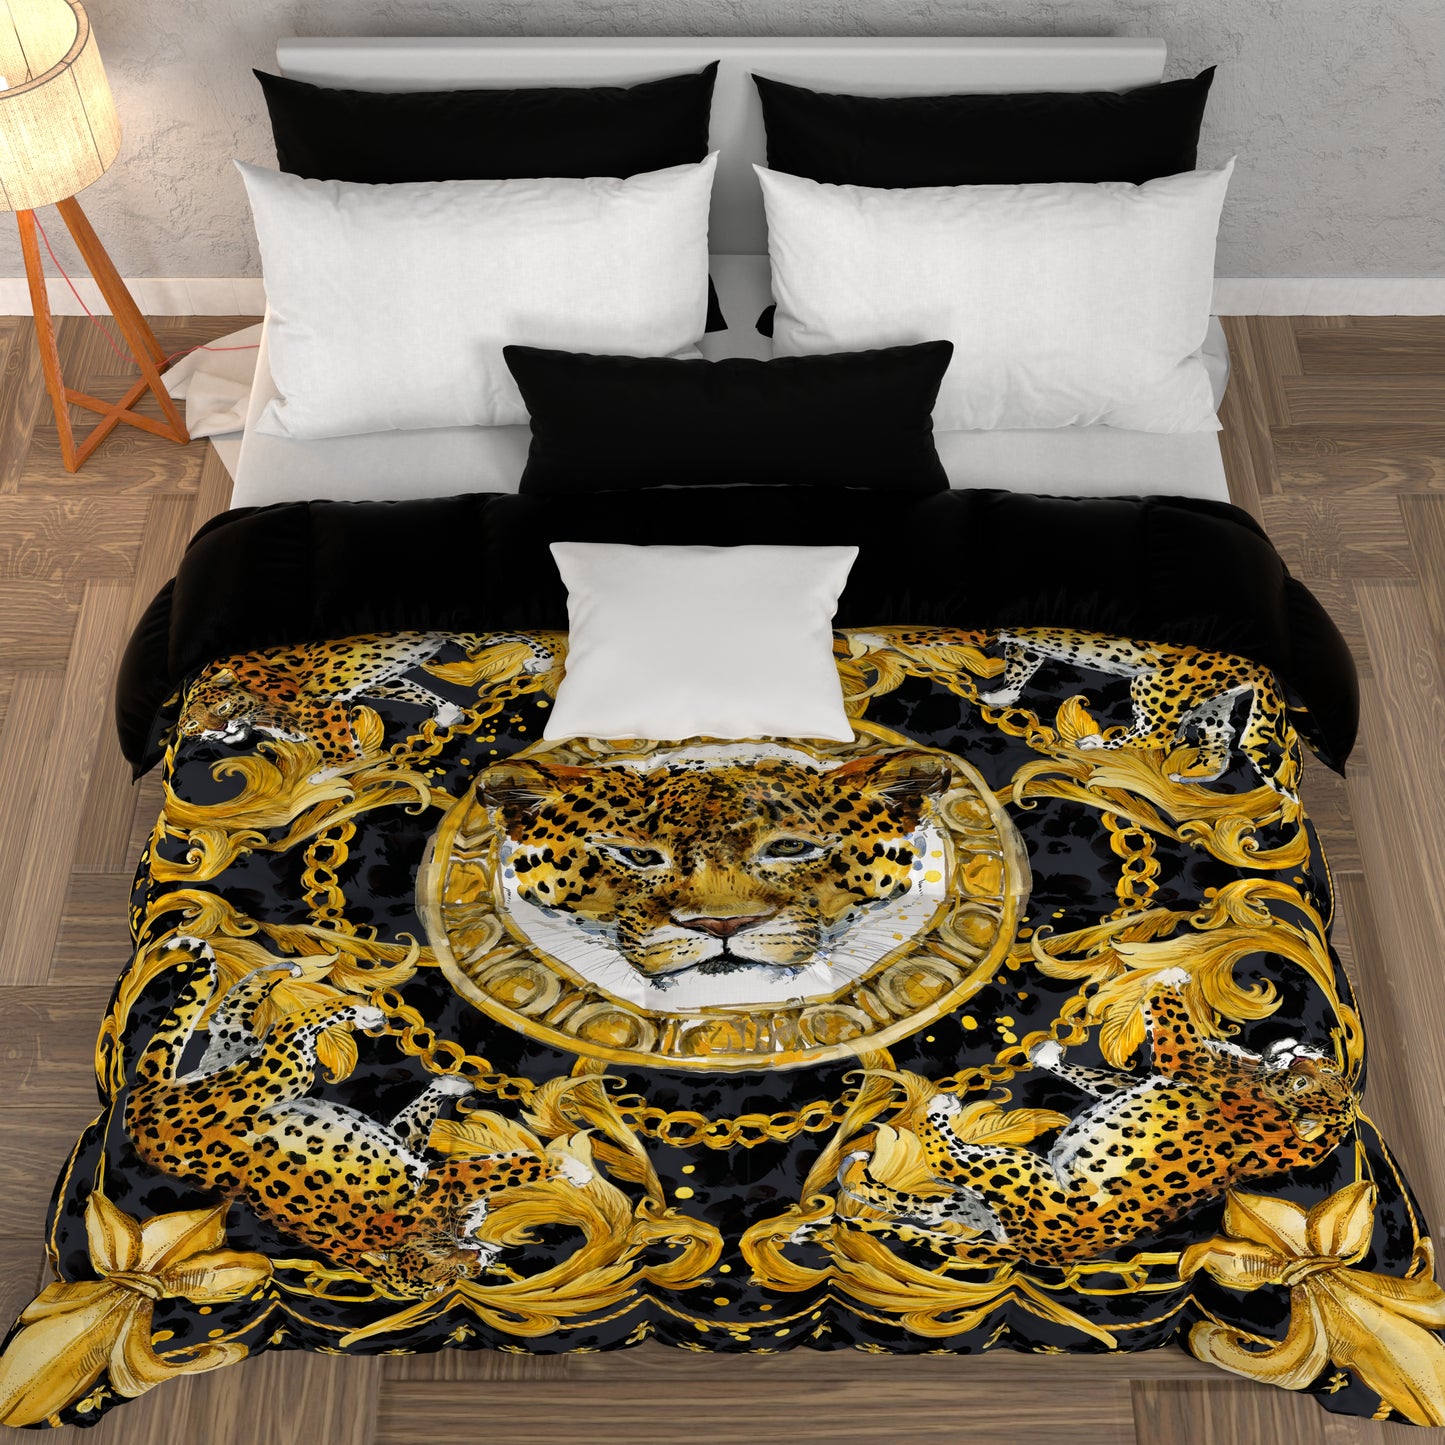 Duvet, Double Quilt, Single, Square and a Half, Leopard